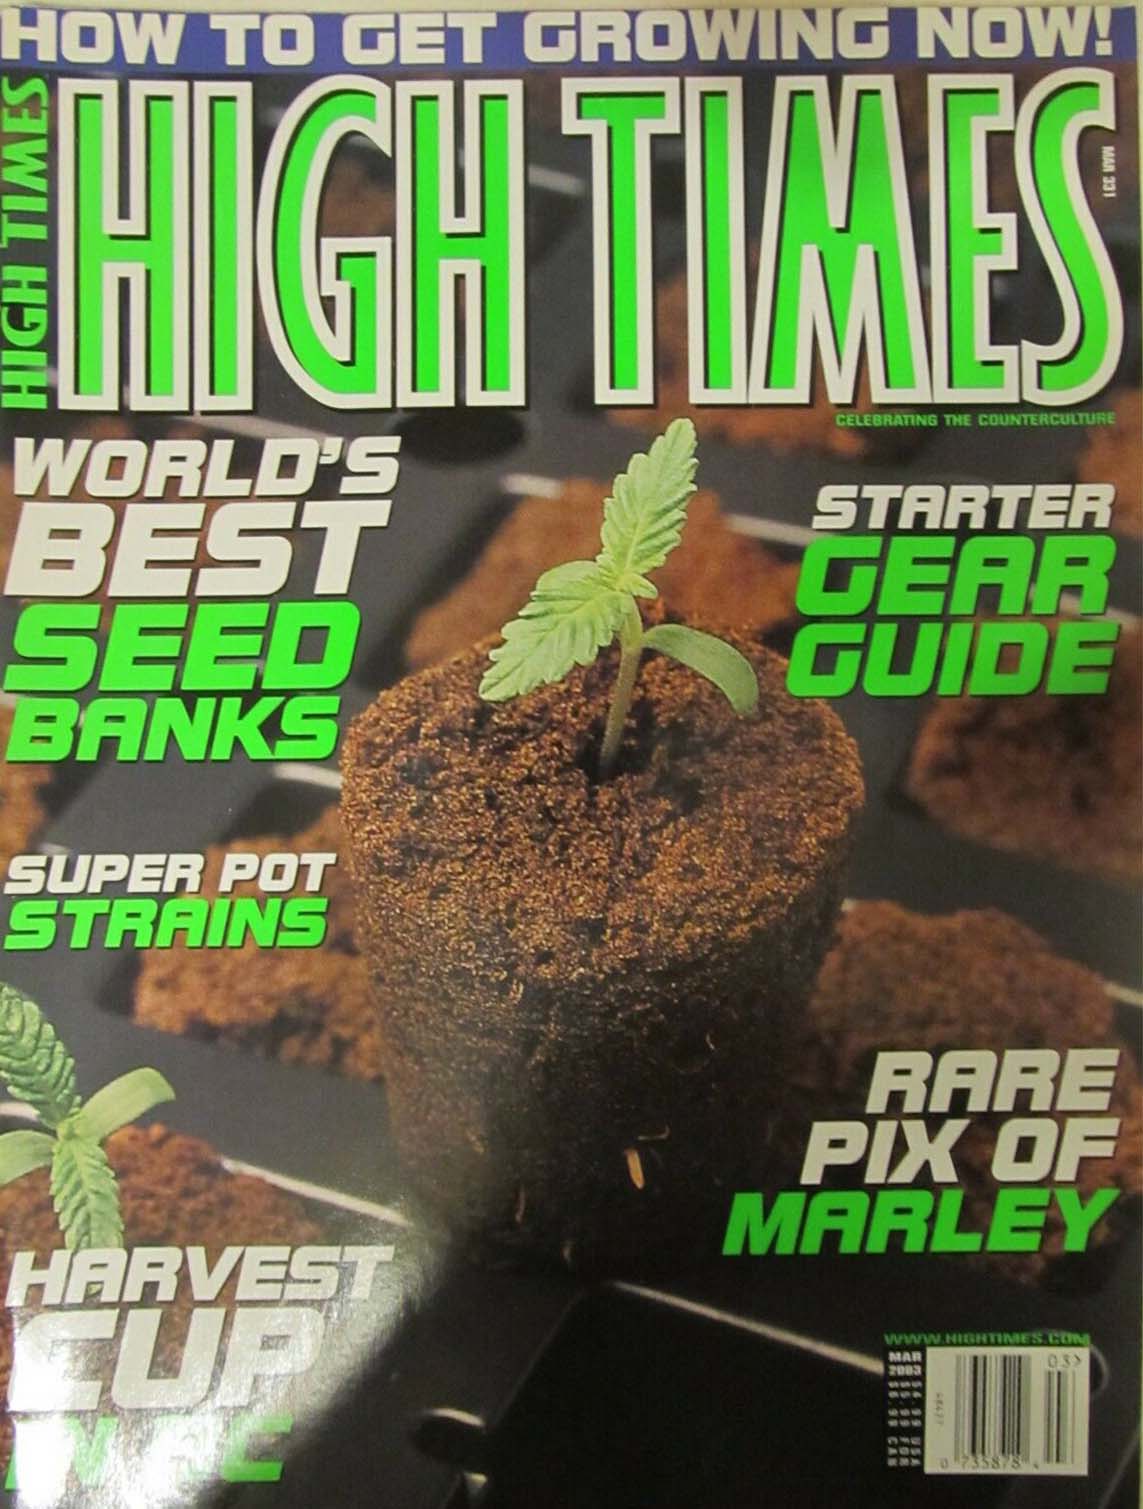 High Times Mar 2003 magazine reviews